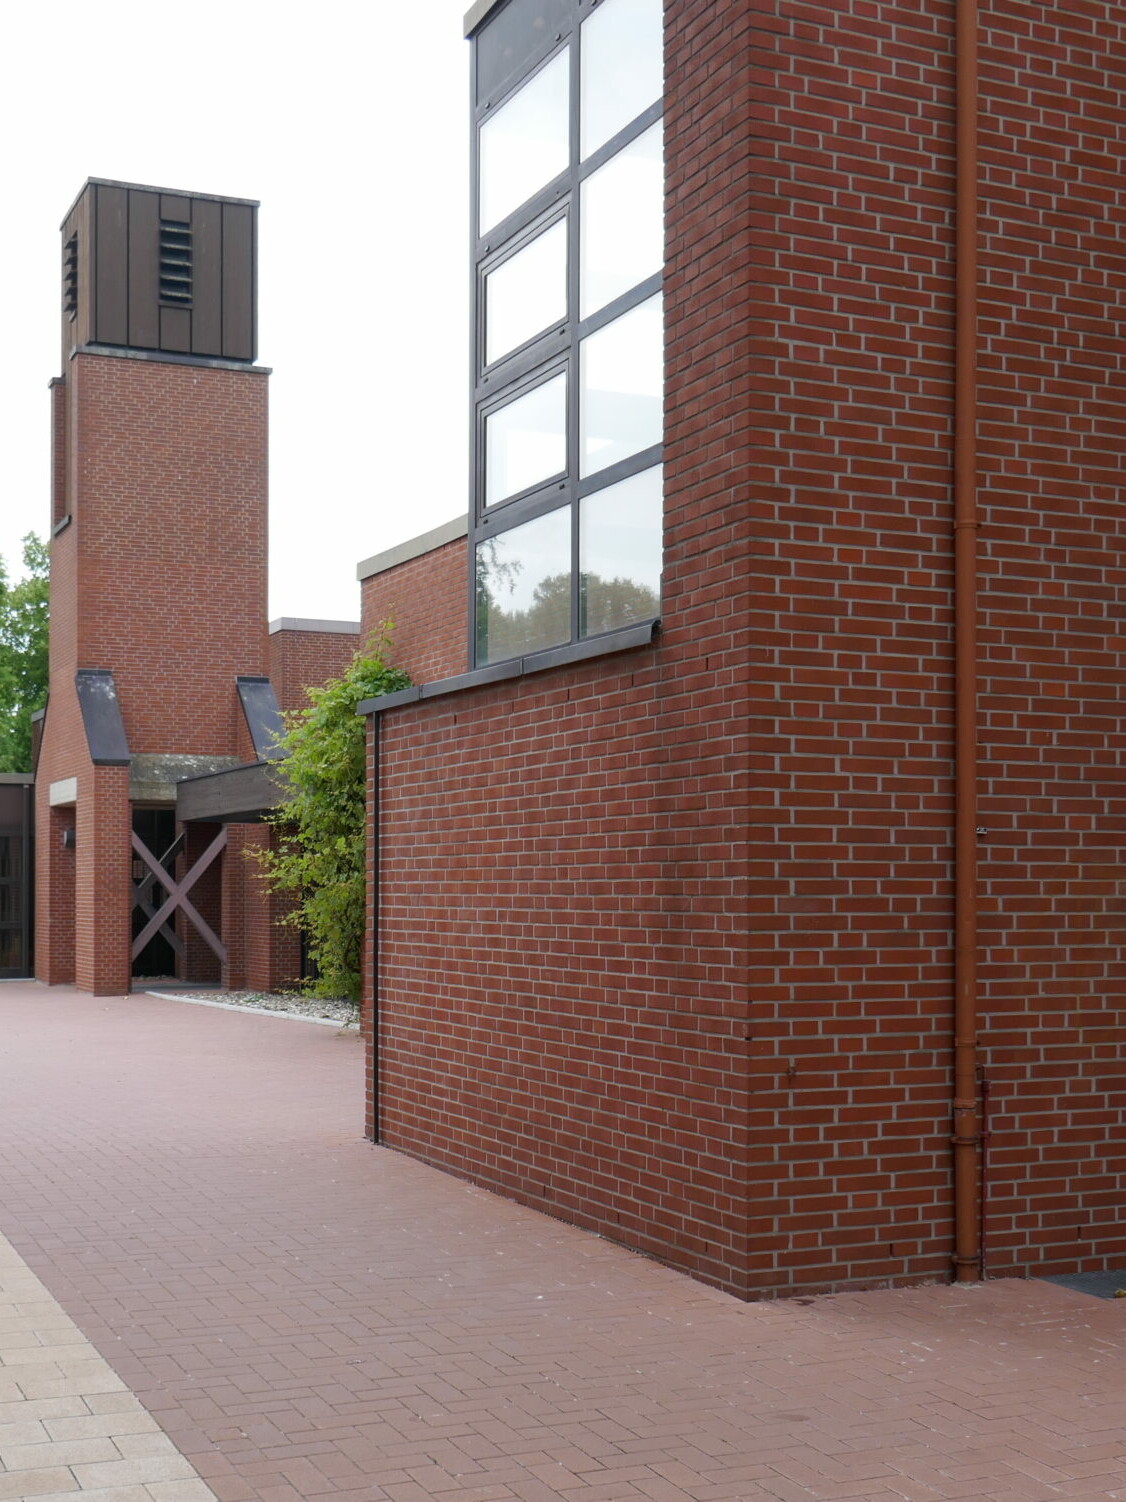 Münster vor Ort: Coerde - Andreaskirche (1970-82) an der Breslauer Straße in neuem Umfeld - Foto: Stefan Rethfeld